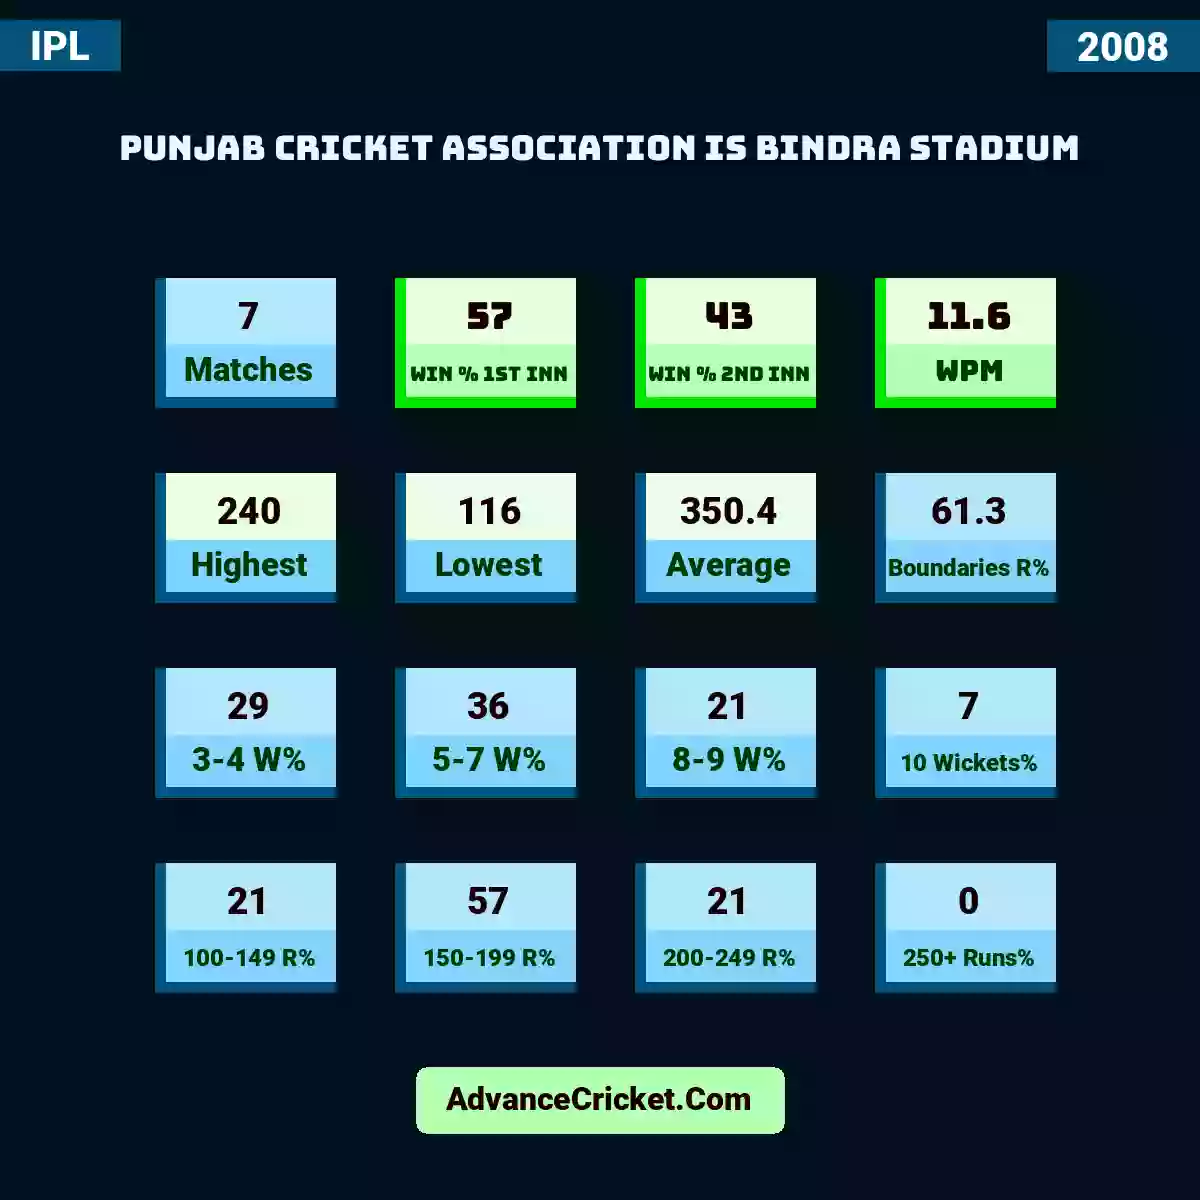 Image showing Punjab Cricket Association IS Bindra Stadium with Matches: 7, Win % 1st Inn: 57, Win % 2nd Inn: 43, WPM: 11.6, Highest: 240, Lowest: 116, Average: 350.4, Boundaries R%: 61.3, 3-4 W%: 29, 5-7 W%: 36, 8-9 W%: 21, 10 Wickets%: 7, 100-149 R%: 21, 150-199 R%: 57, 200-249 R%: 21, 250+ Runs%: